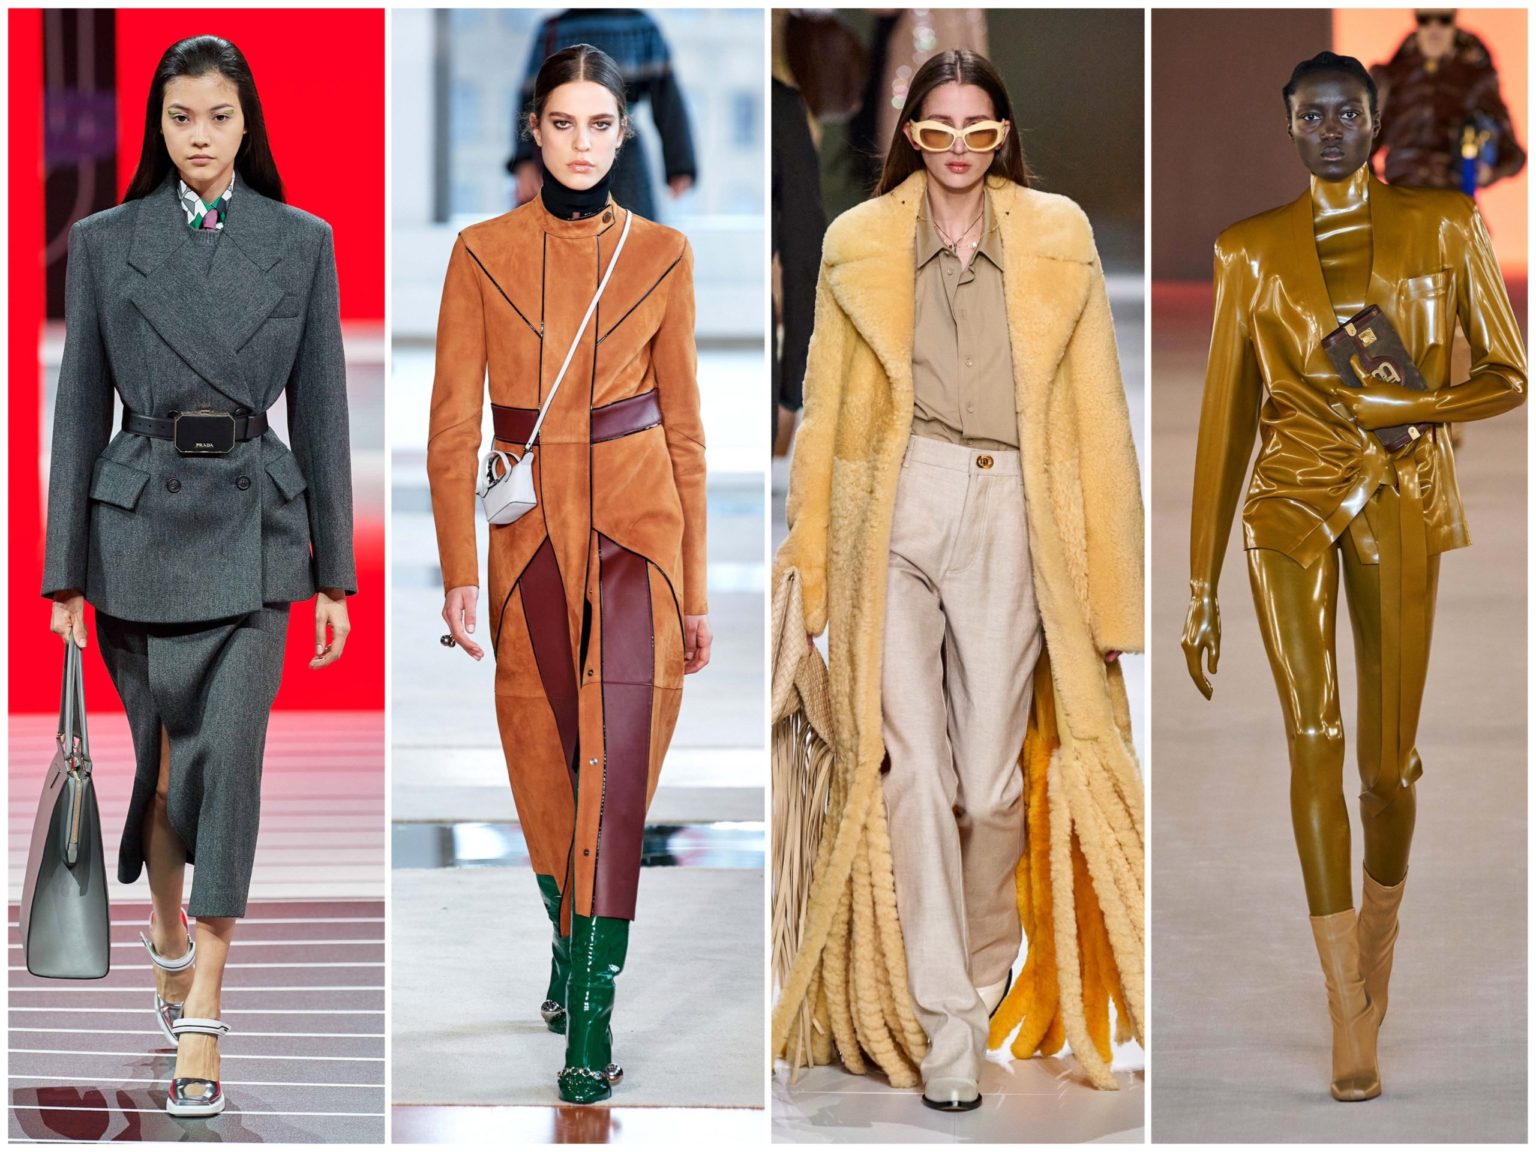 New Fashion Trends For Winter 2100 - Your Fashion Guru